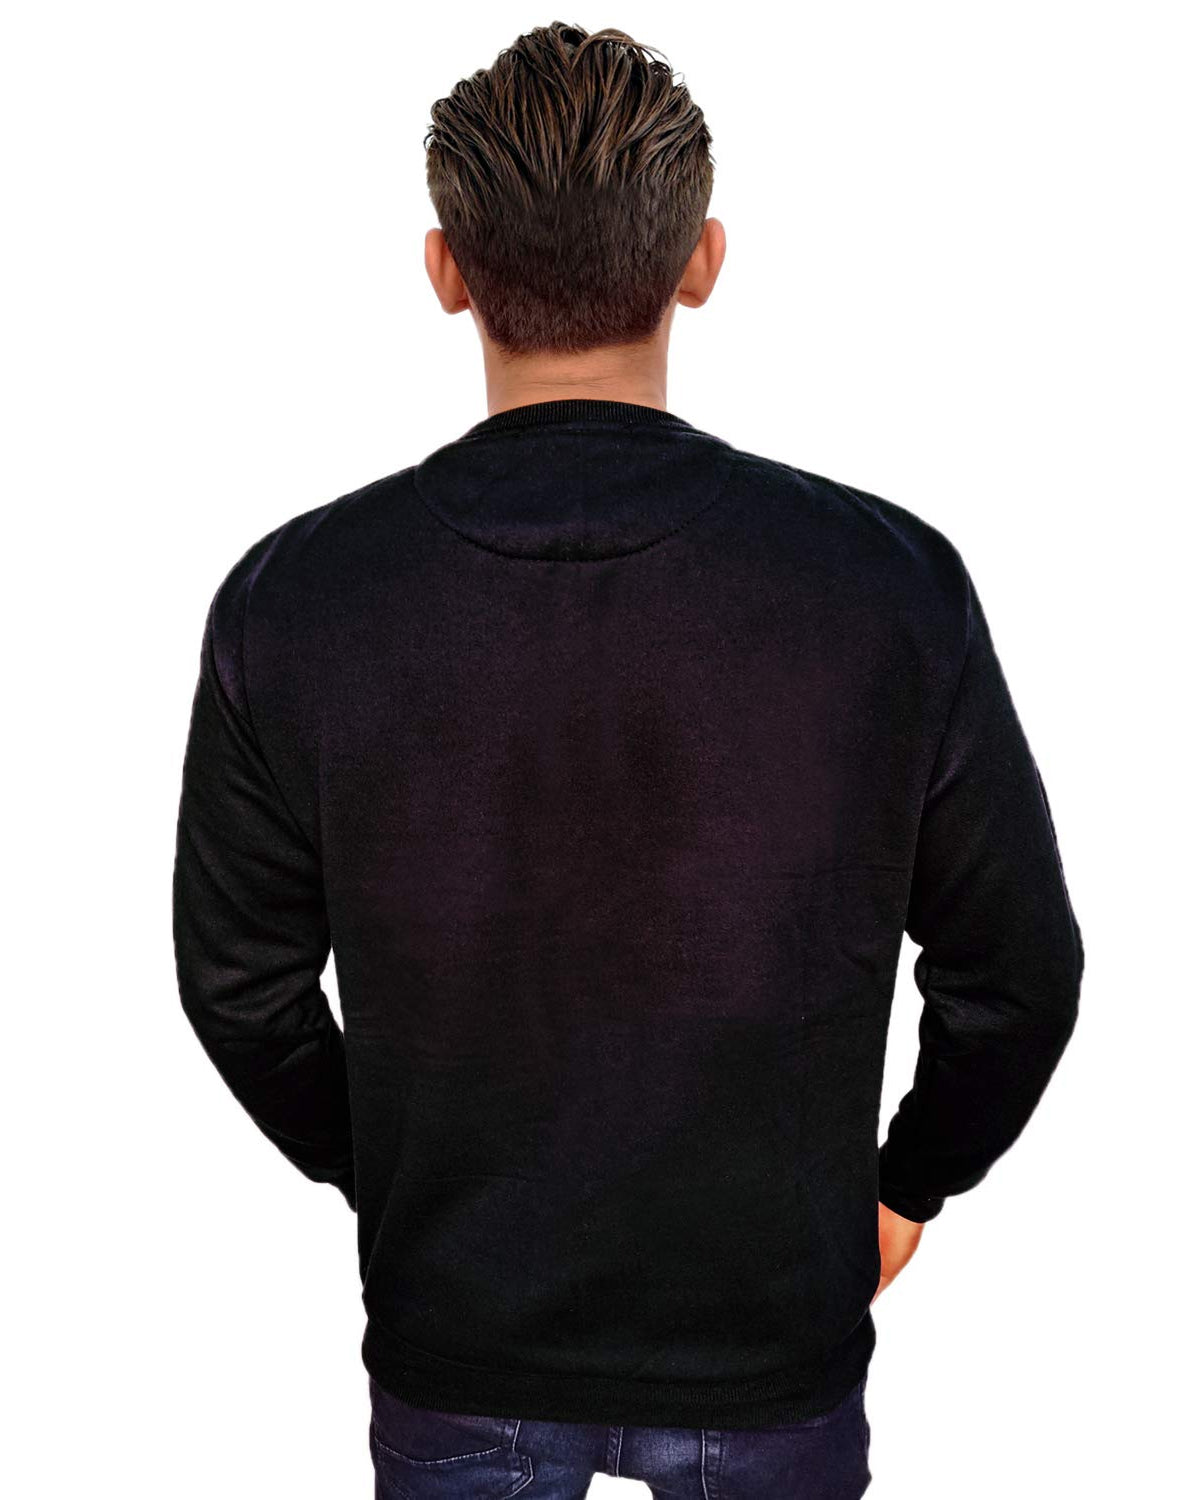 Prokick Men's Round Neck Sweatshirt - Black - Best Price online Prokicksports.com